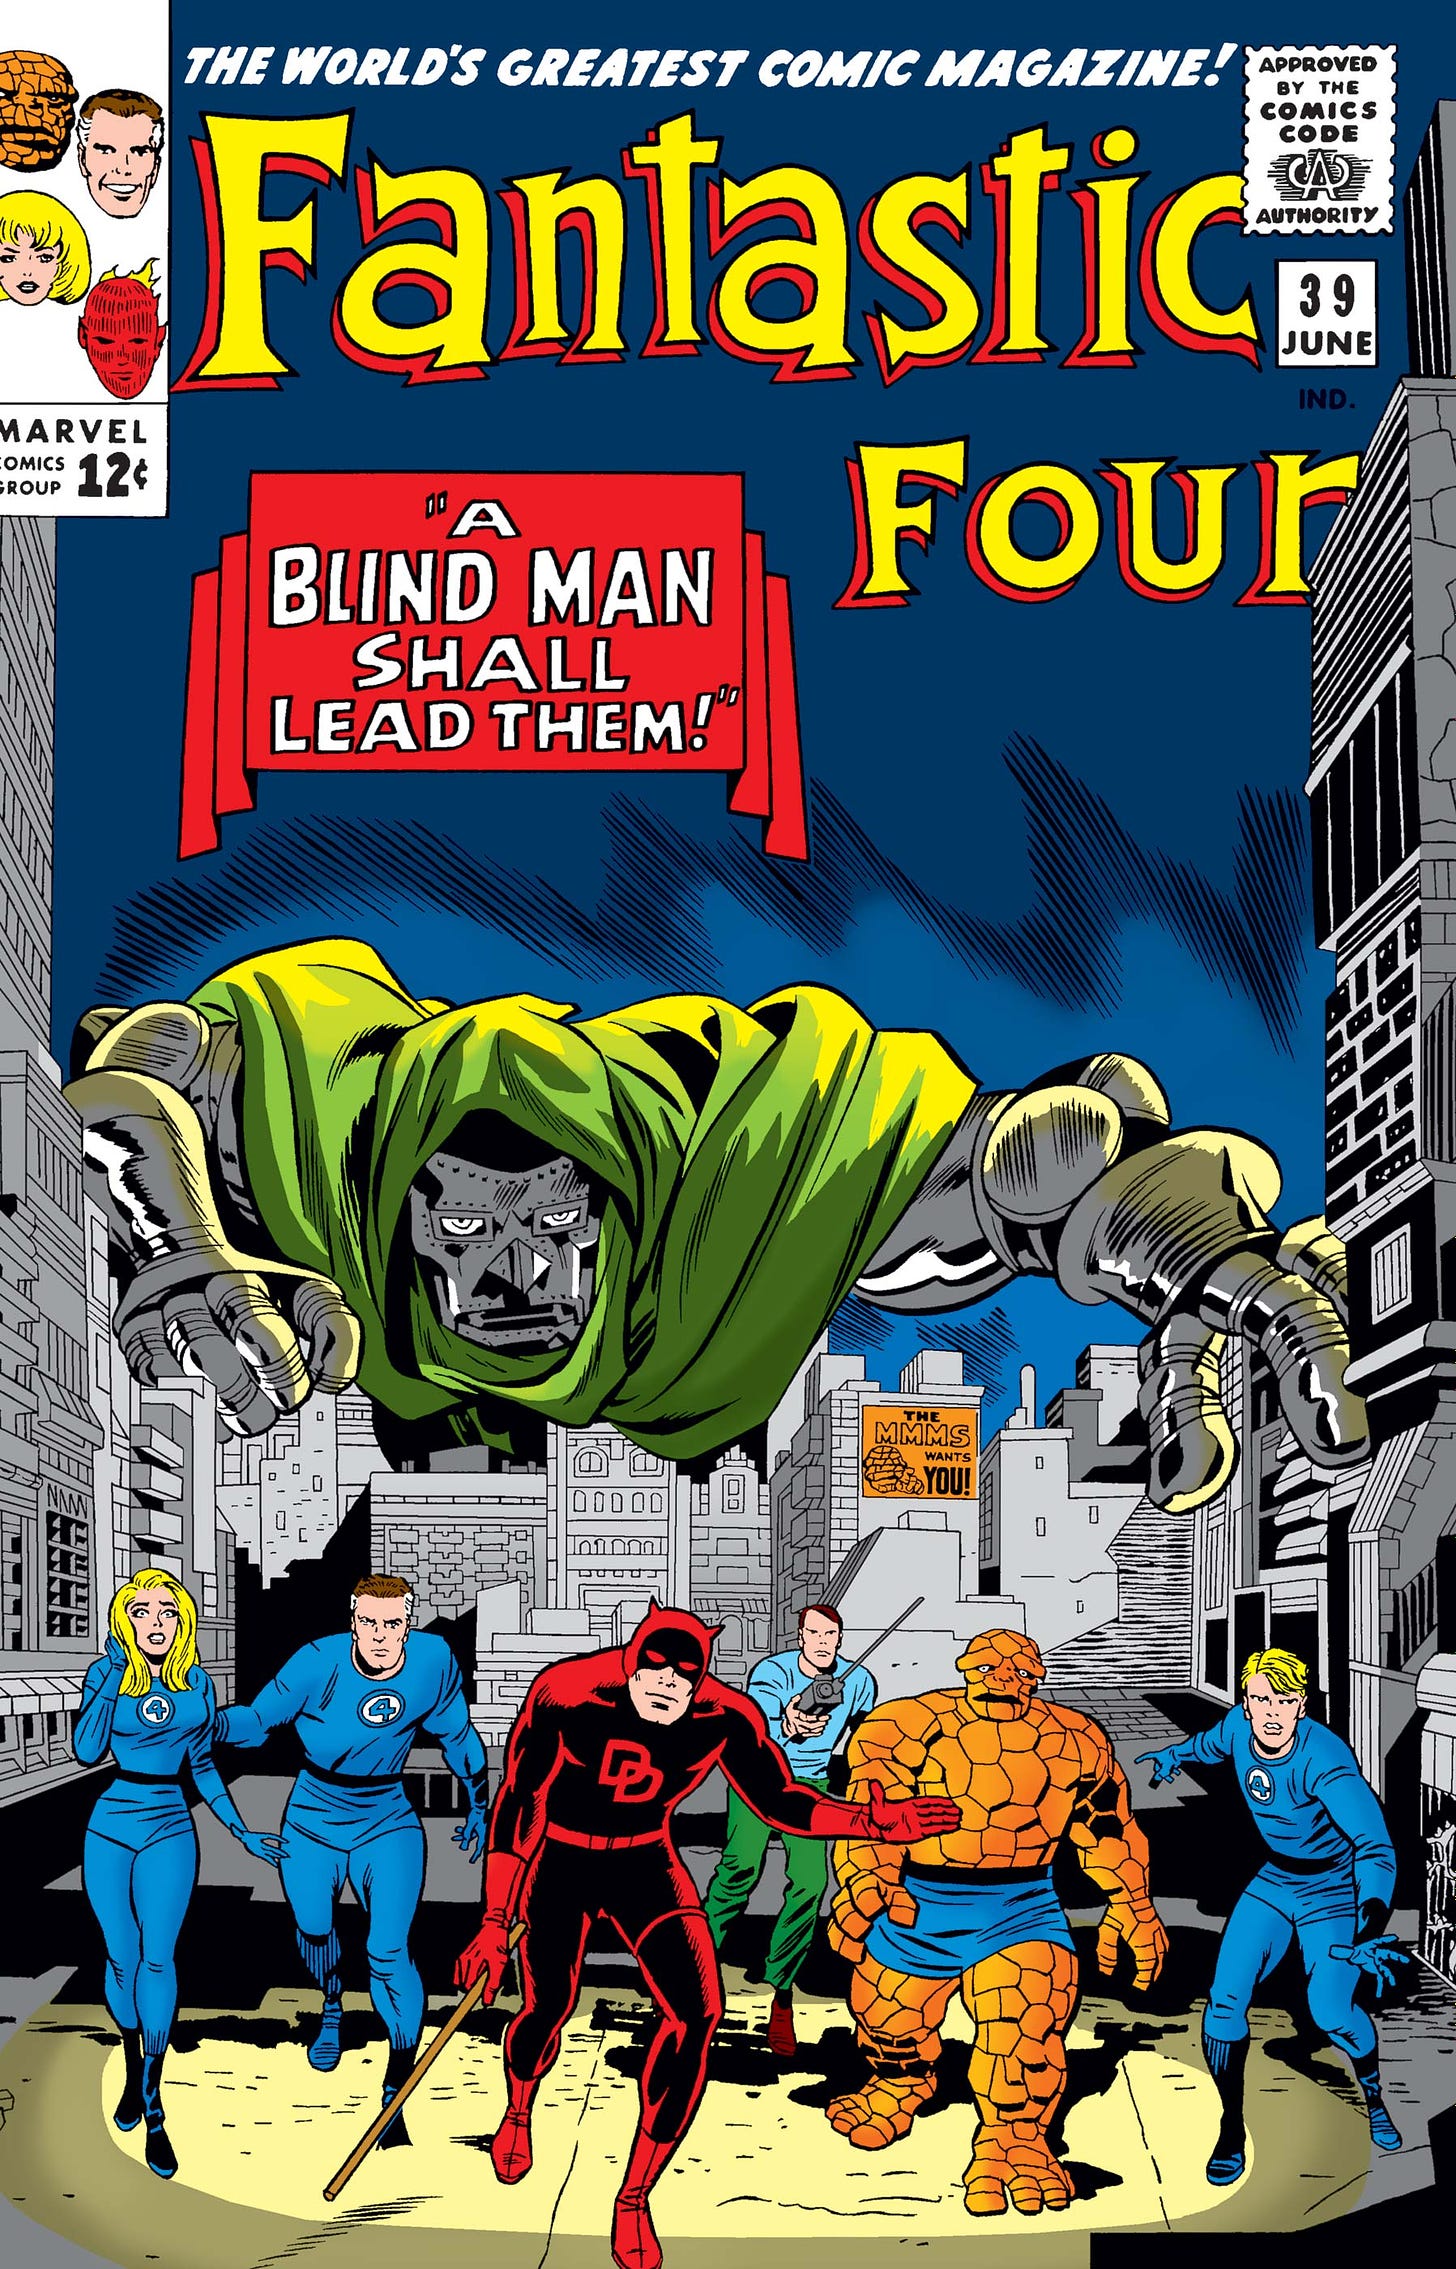 Fantastic Four (1961) #39 | Comic Issues | Marvel